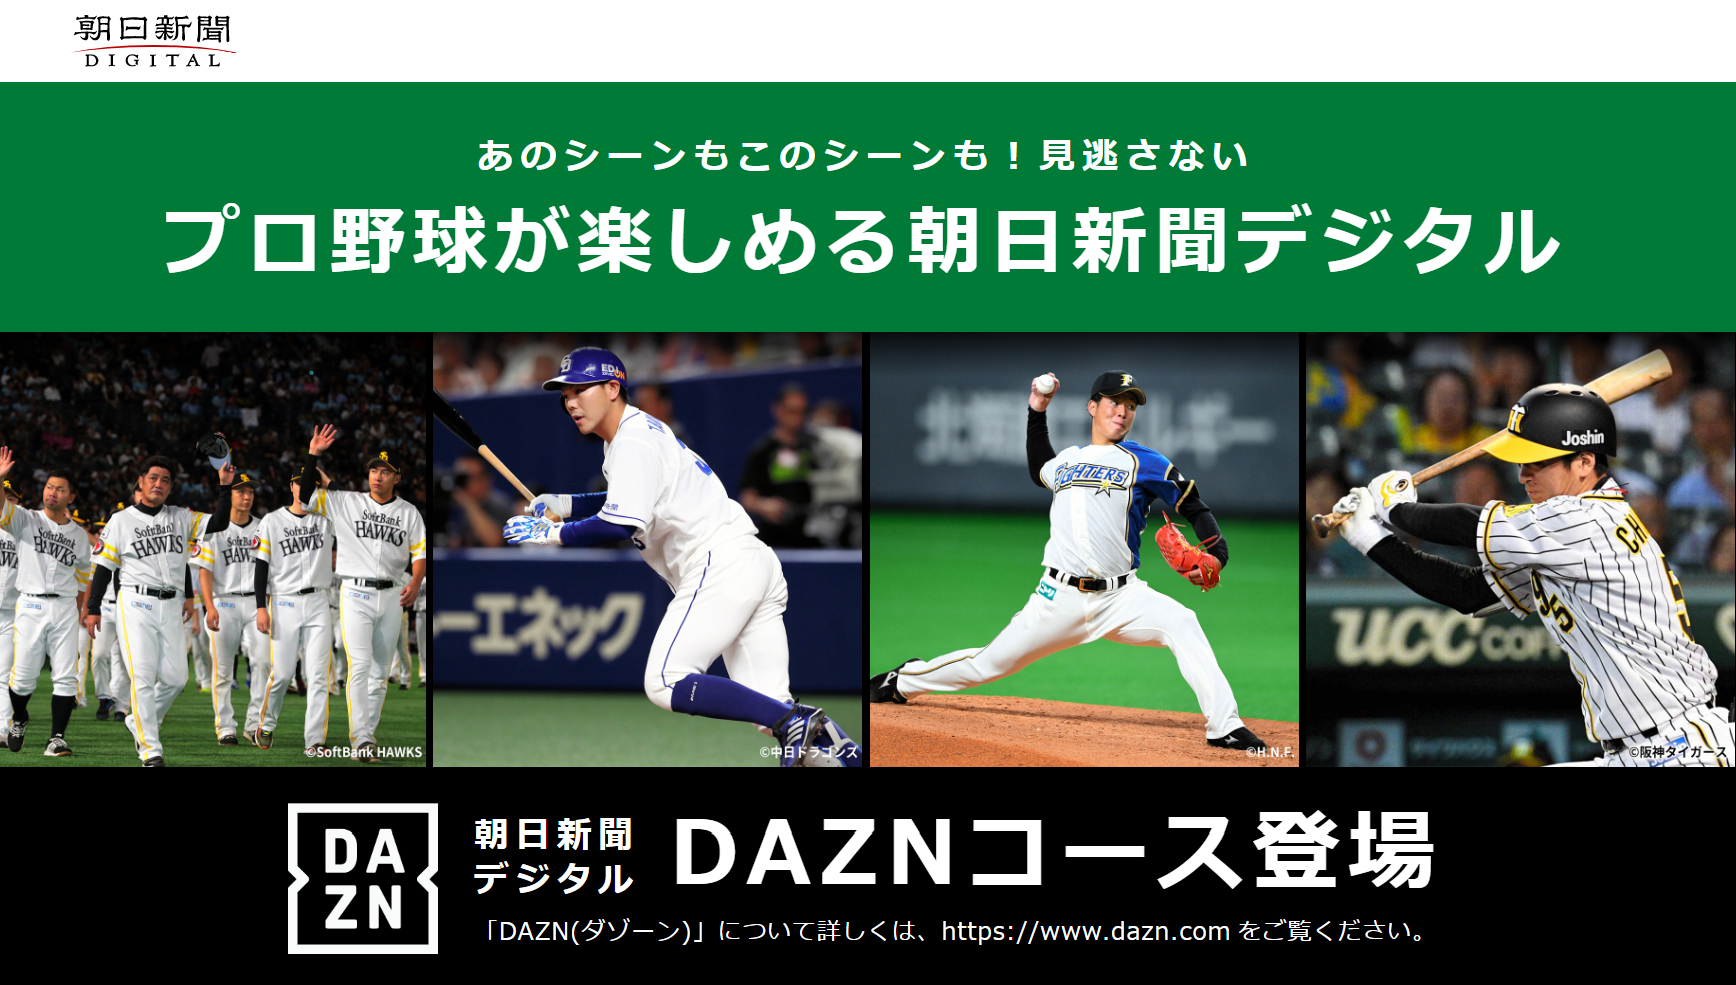 Daznコース の販売を開始 株式会社朝日新聞社のプレスリリース